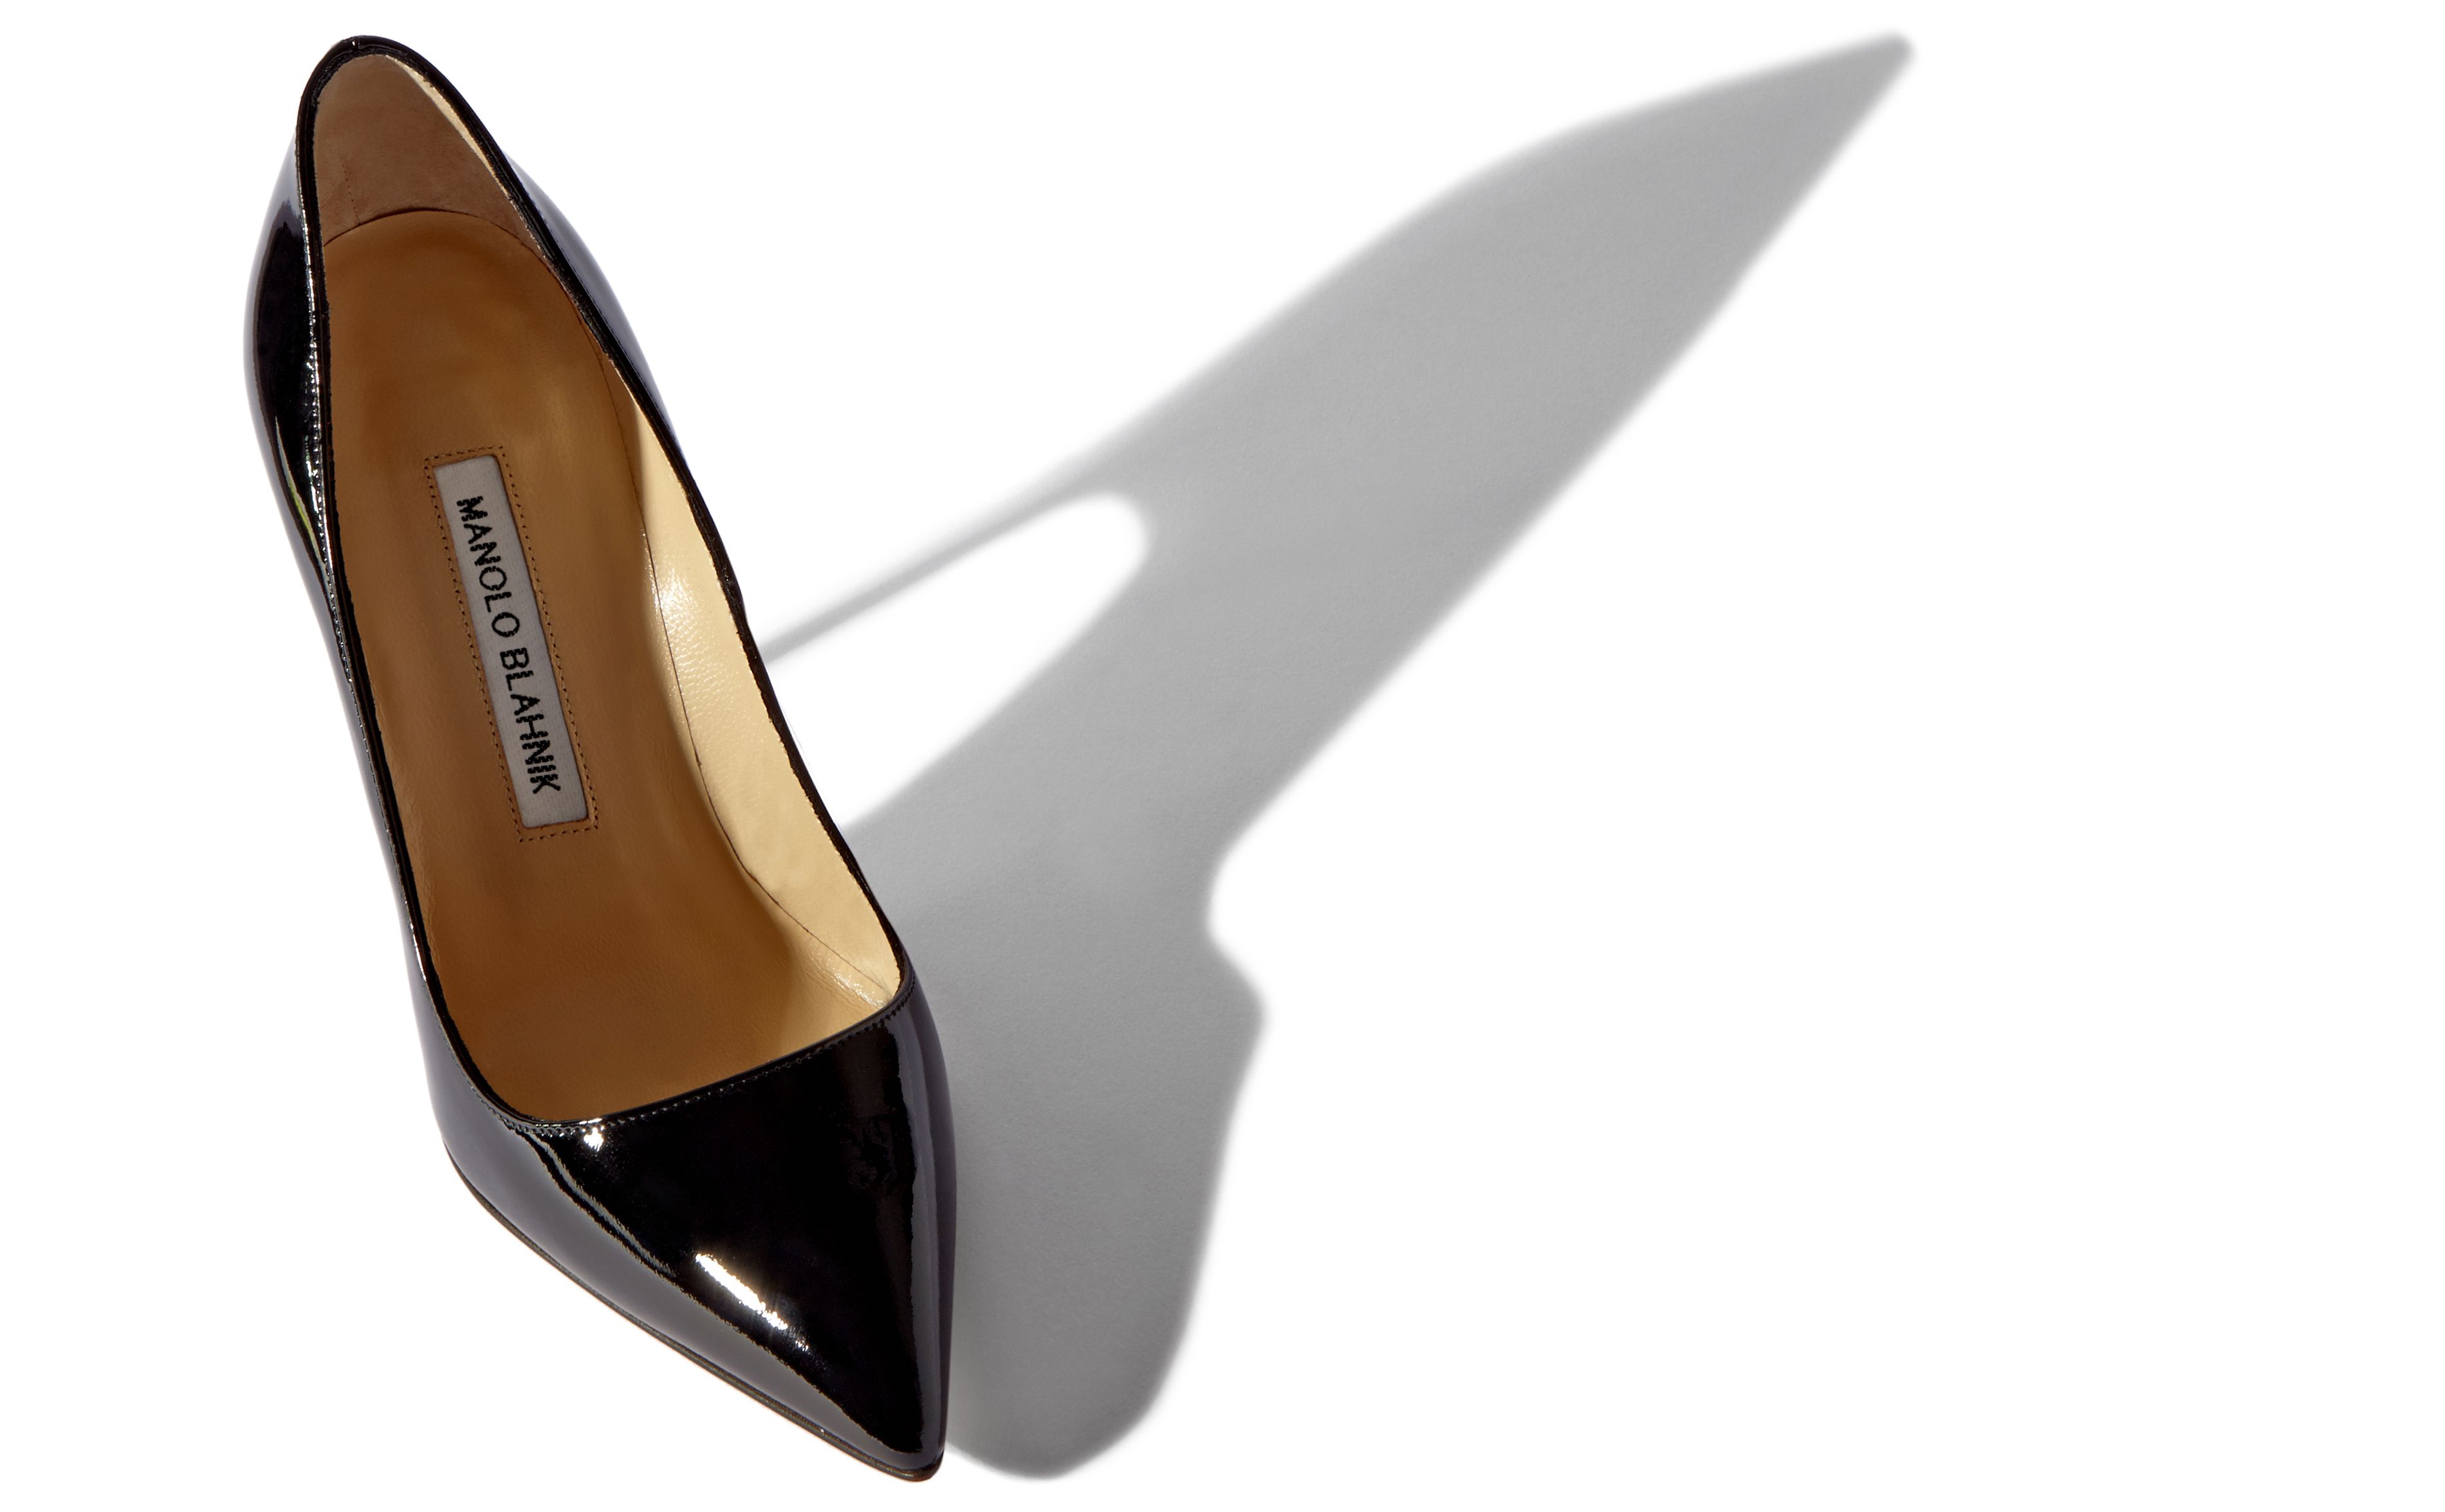 Patent leather heels